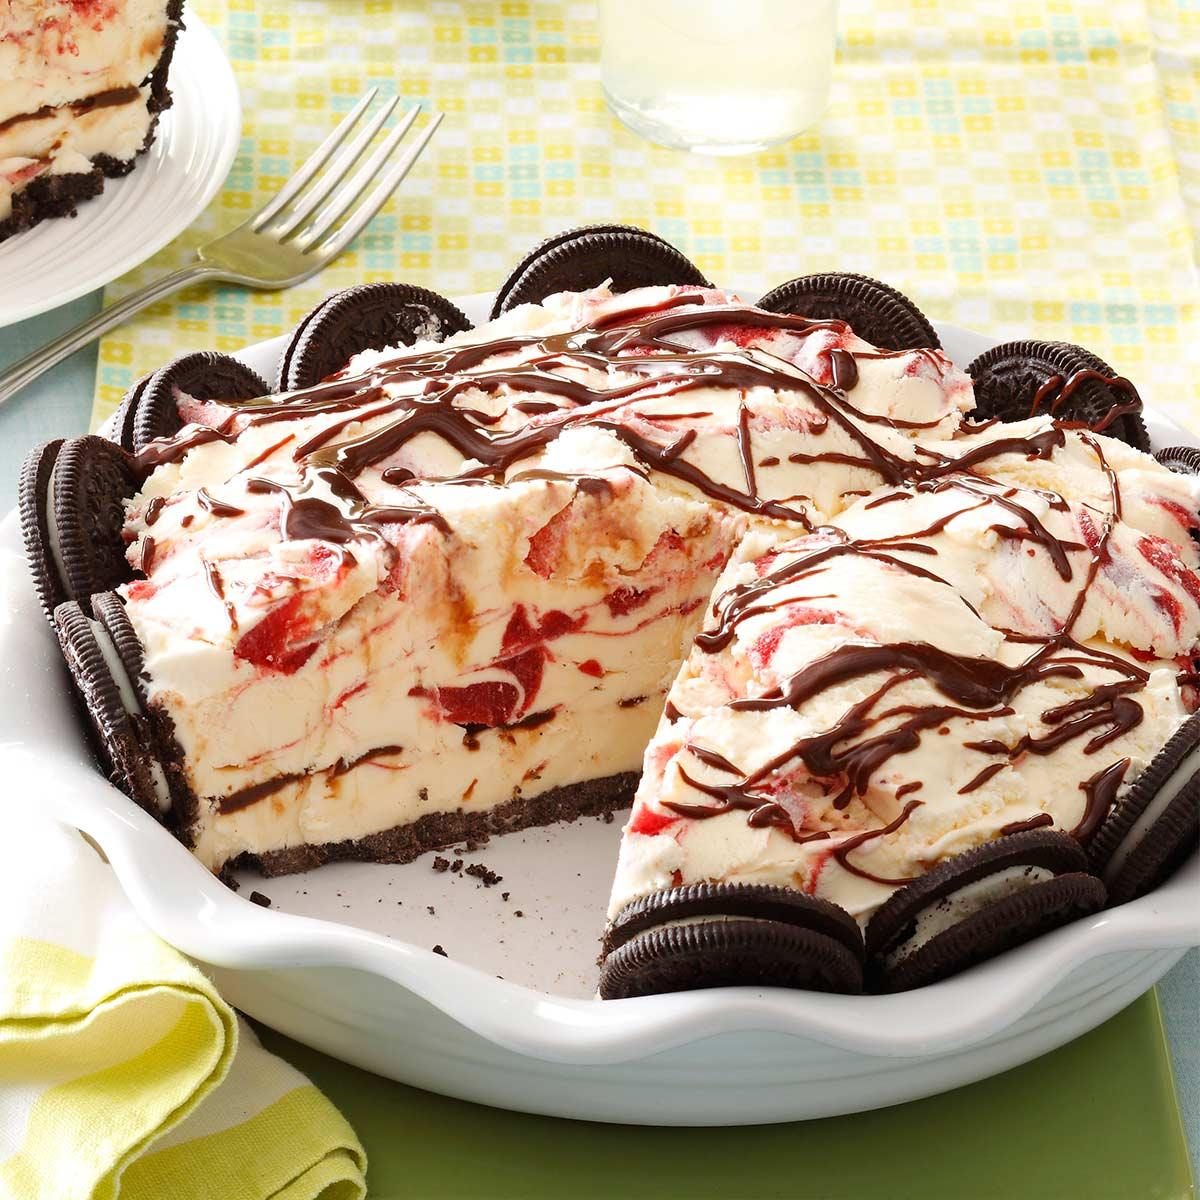 Cookie Ice Cream Pie Recipe: How to Make It